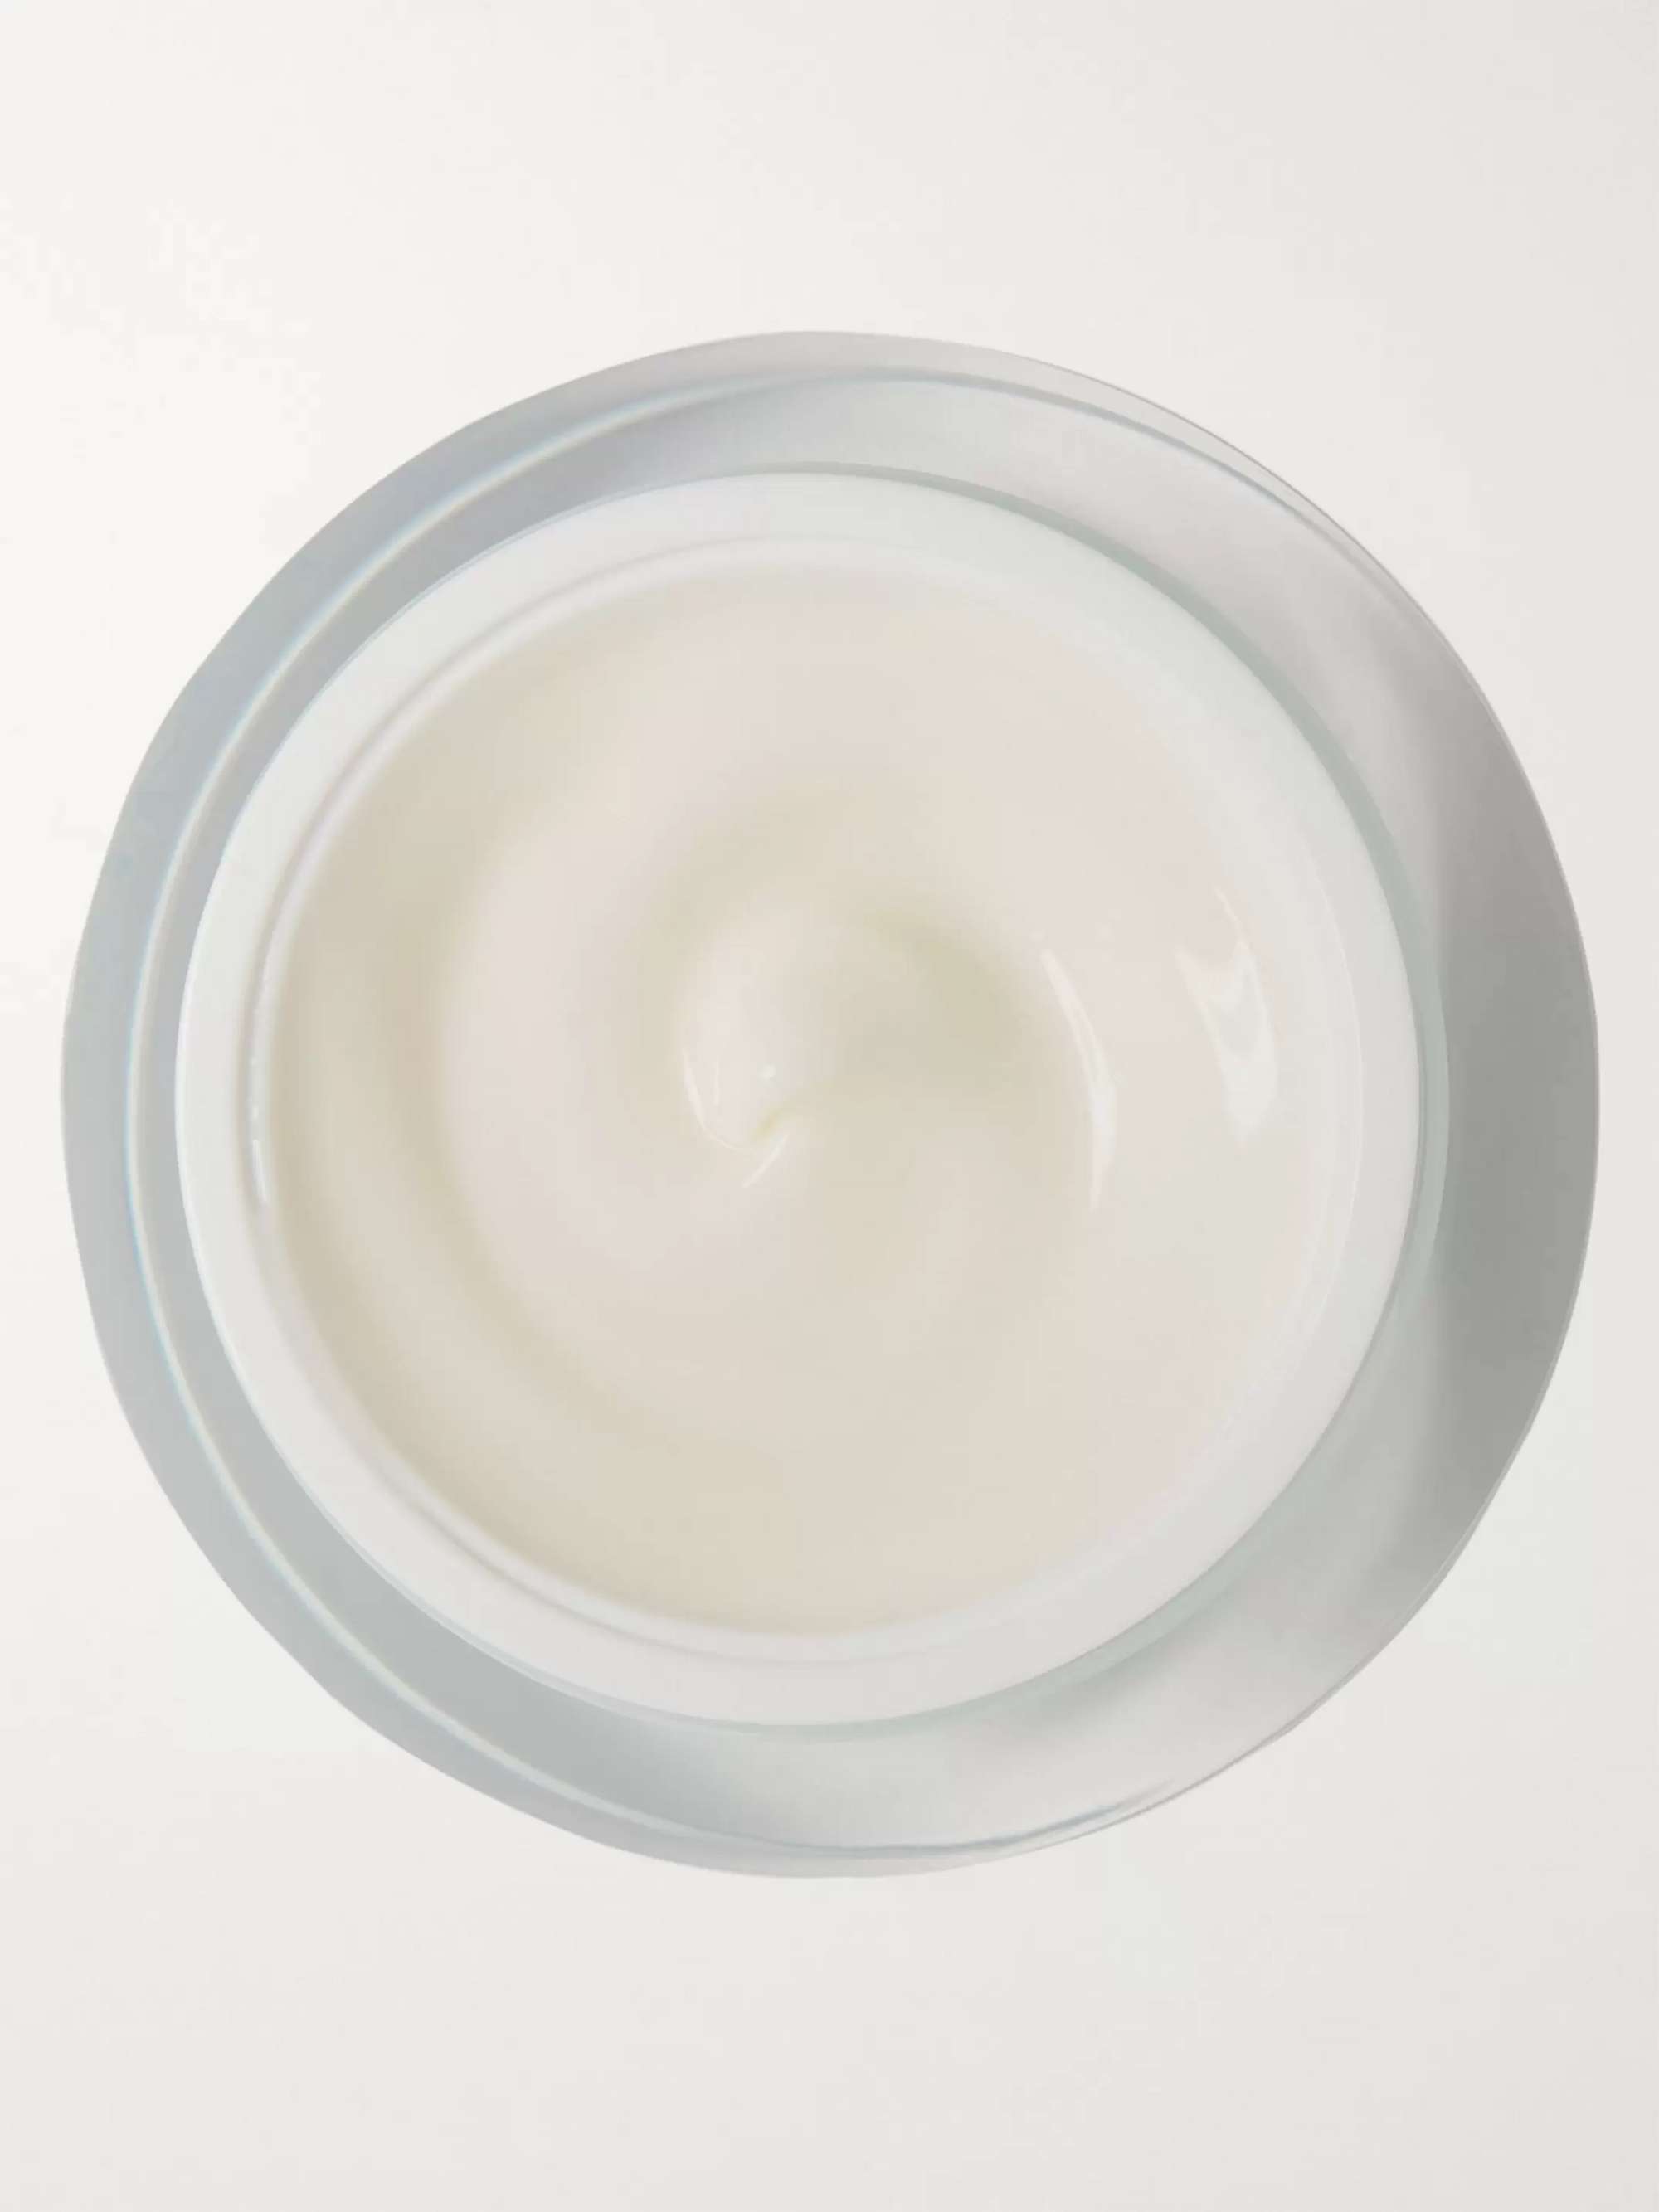 ELEMIS Pro-Collagen Marine Cream SPF30, 50ml